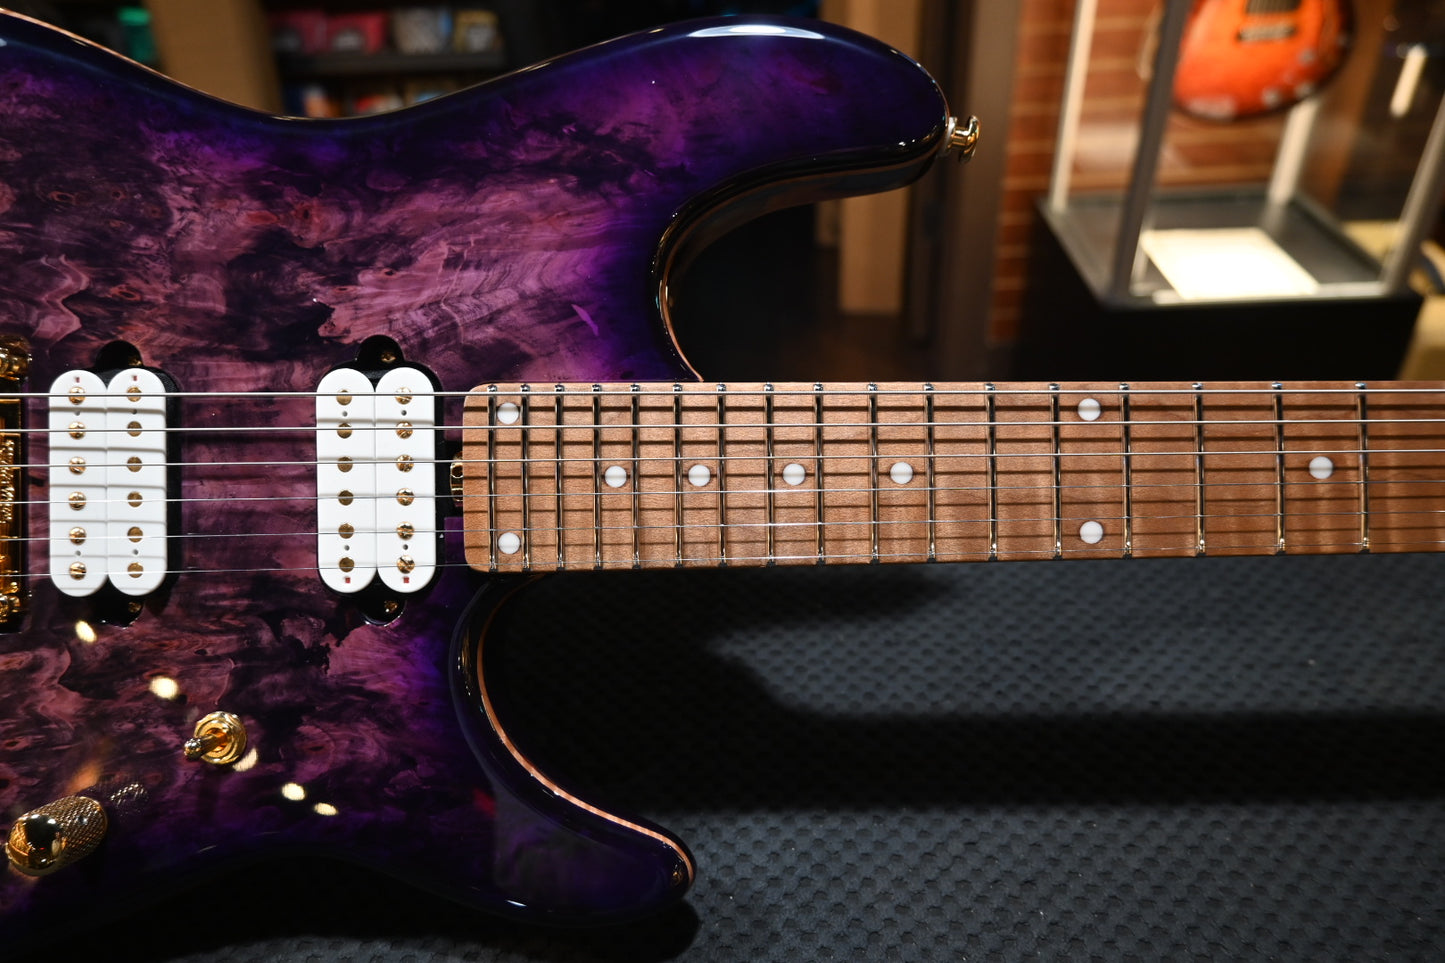 Music Man Jason Richardson Signature Cutlass - Majora Purple Guitar #0000 - Danville Music